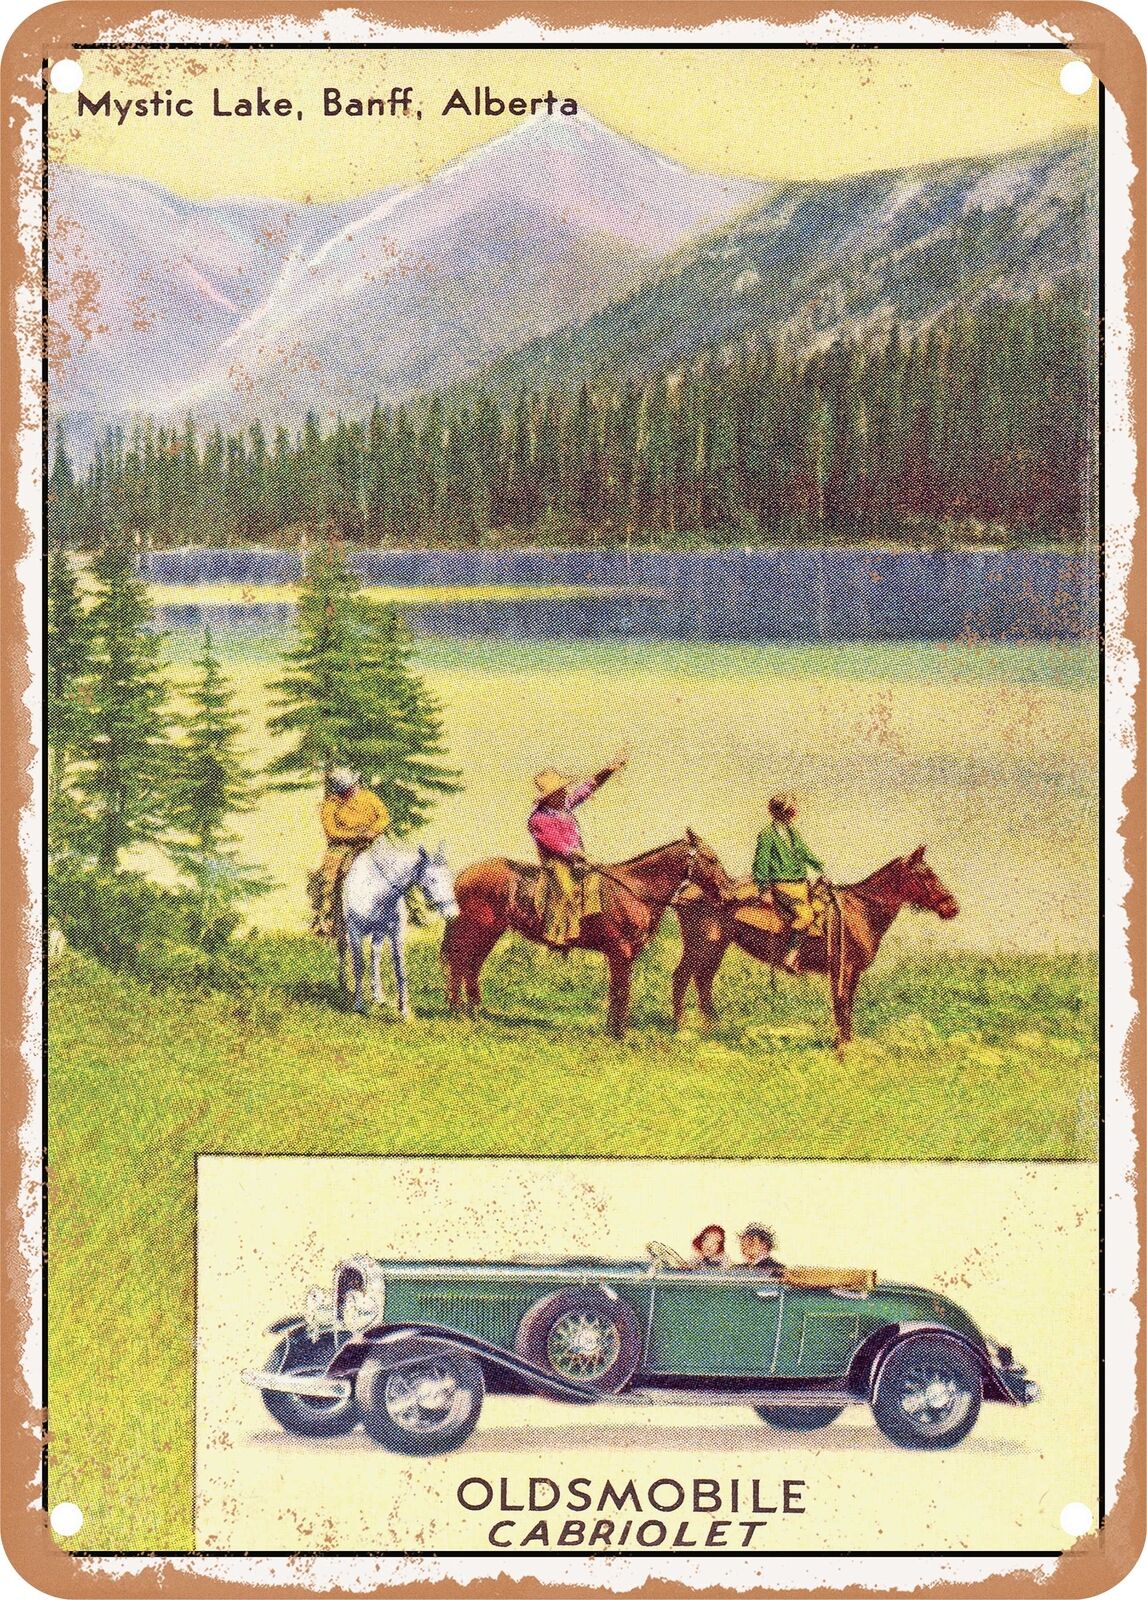 METAL SIGN - 1931 Oldsmobile Cabriolet Mystic Lake Banff Alberta Vintage Ad